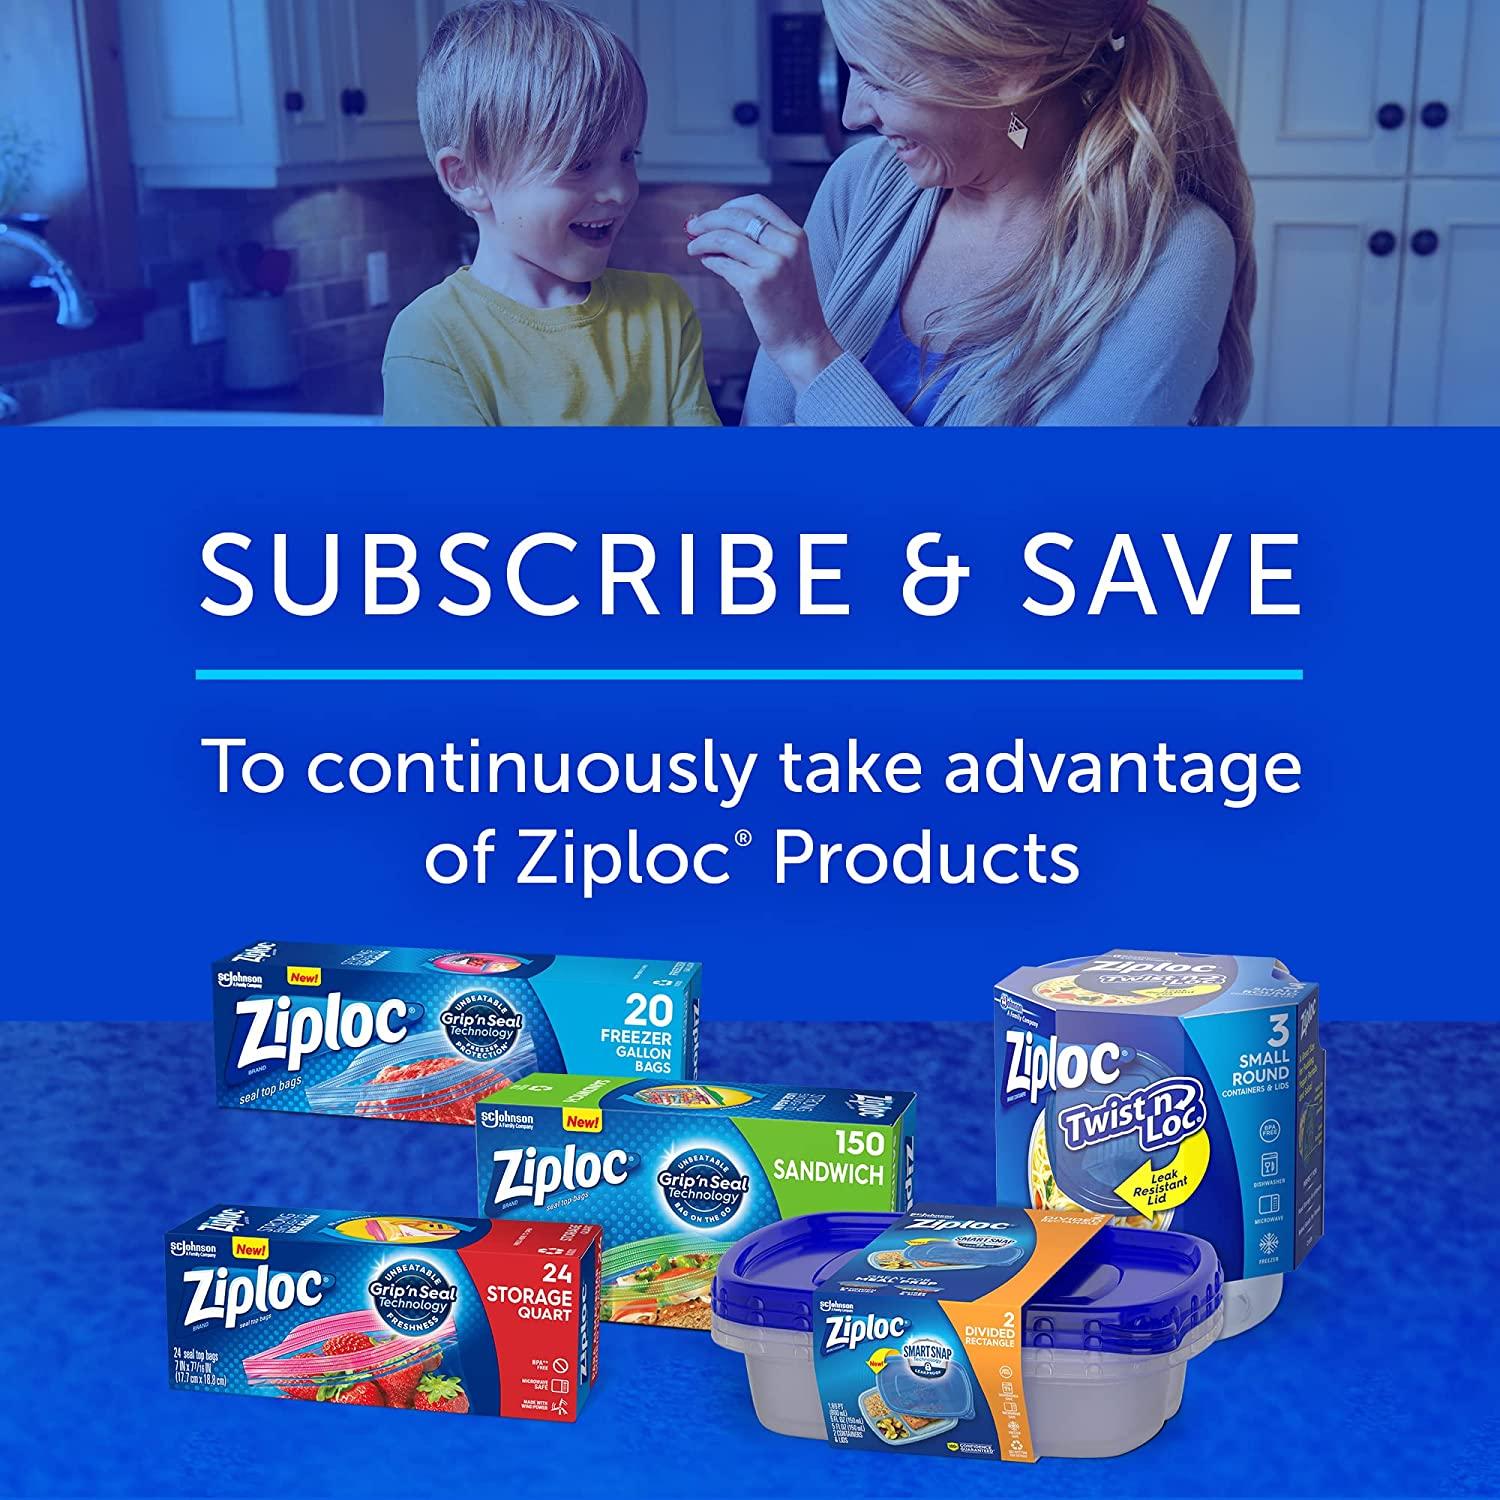 Ziploc Two Gallon Food Storage Freezer Bags, Grip 'n Seal